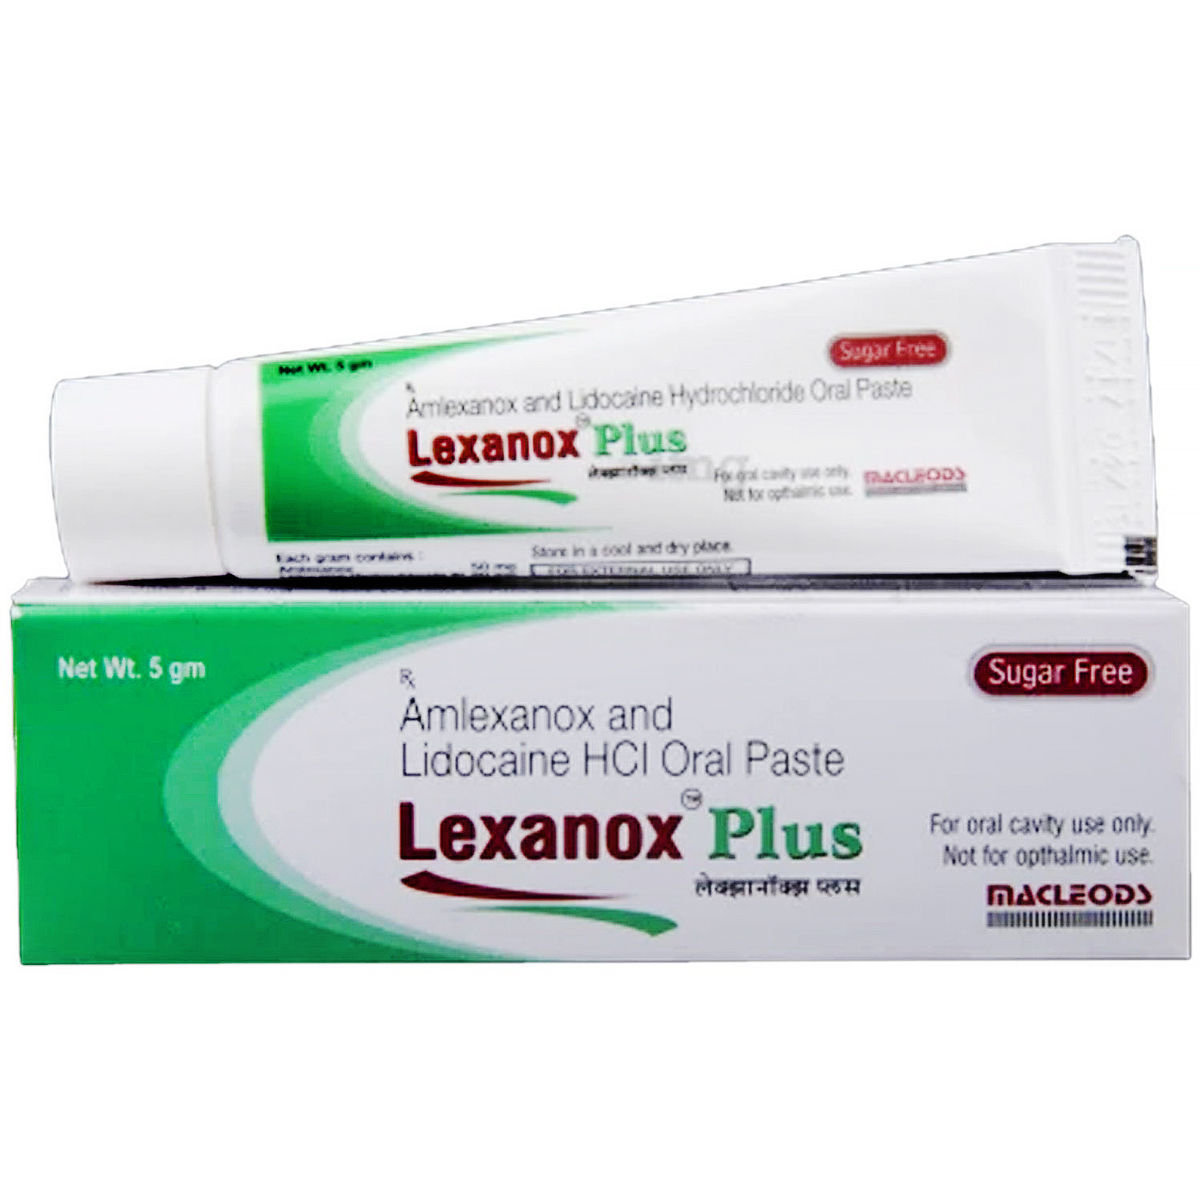 Buy Lexanox Plus Oral Paste, 5 gm Online